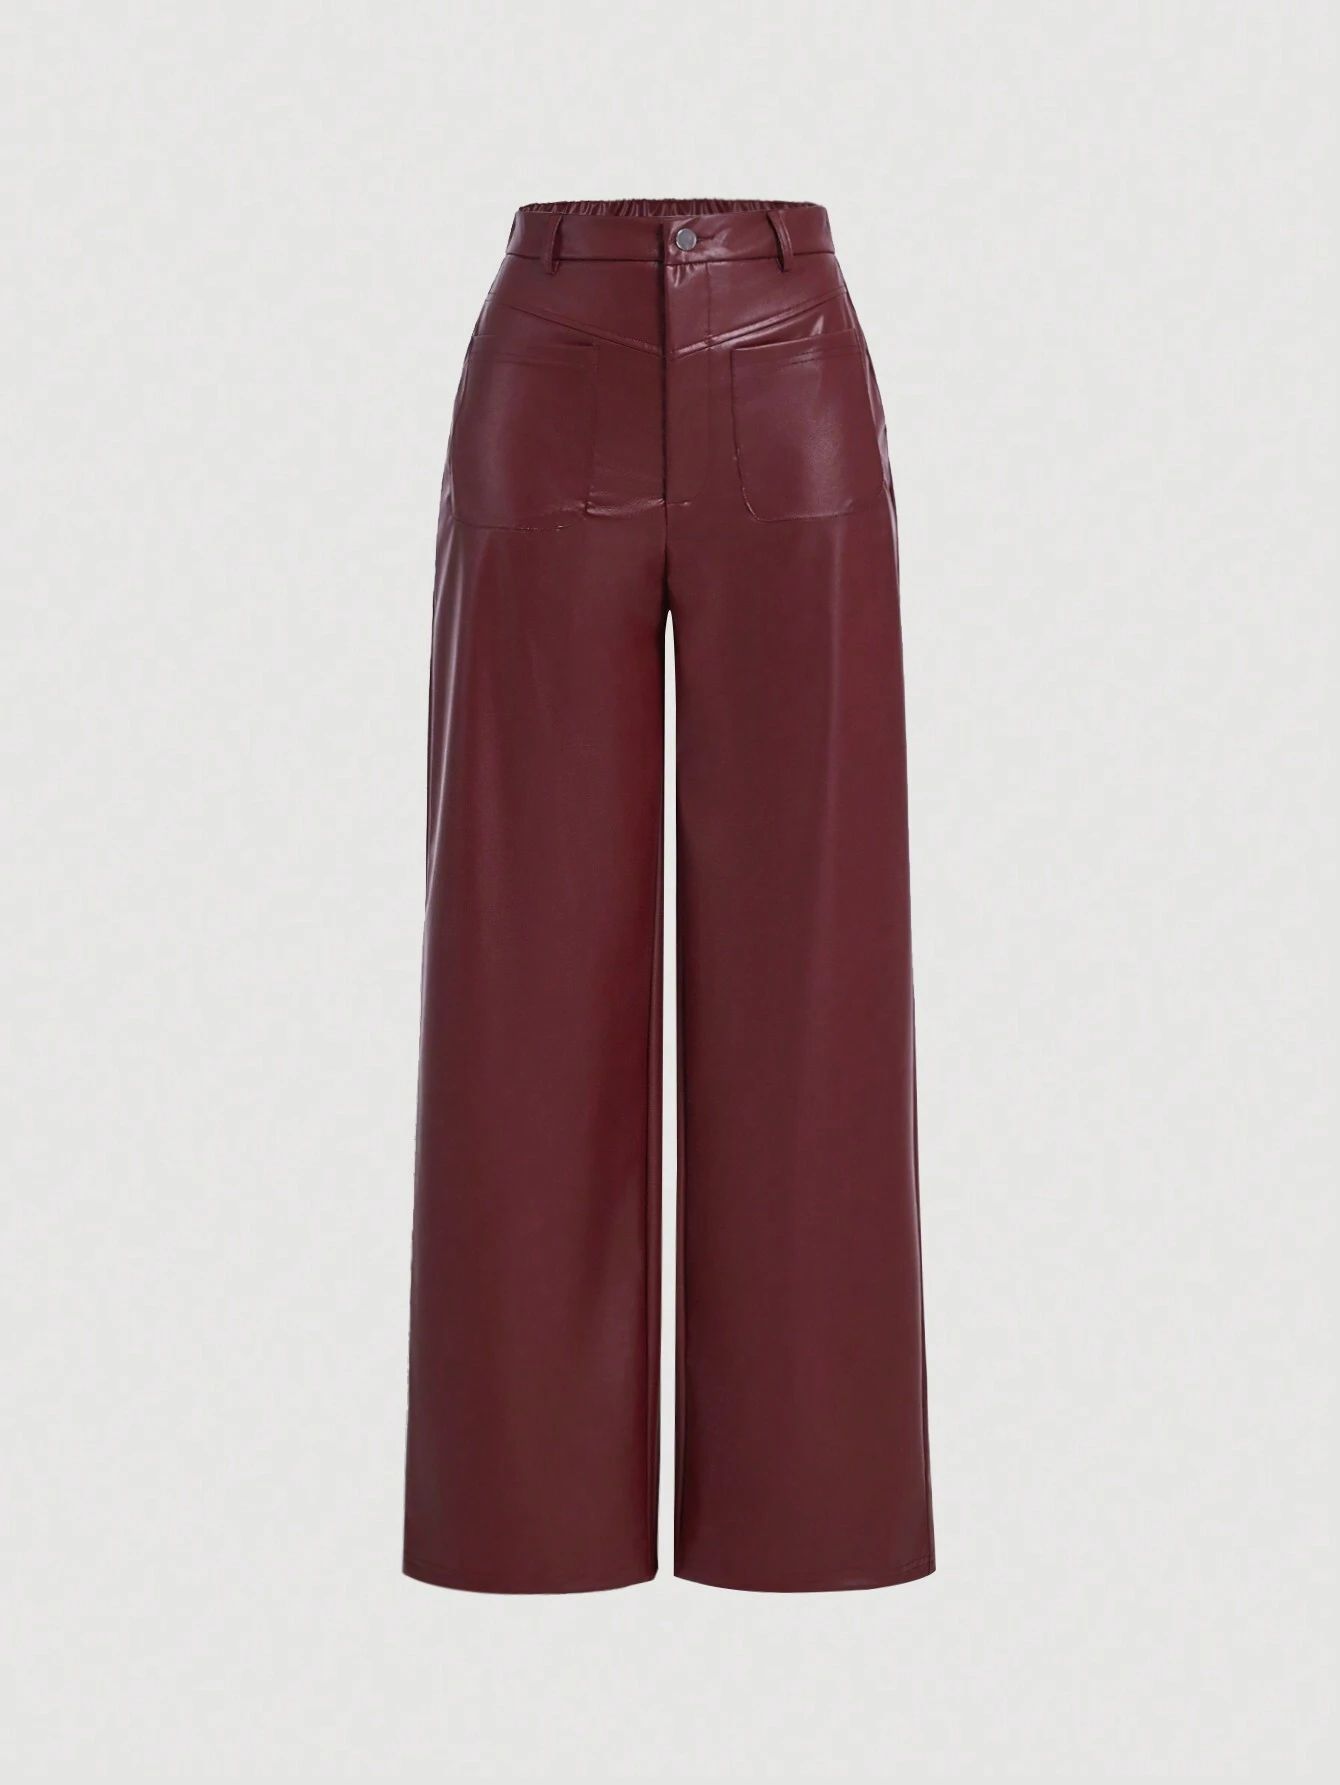 SHEIN MOD Women's Vintage Pu Leather Pants | SHEIN